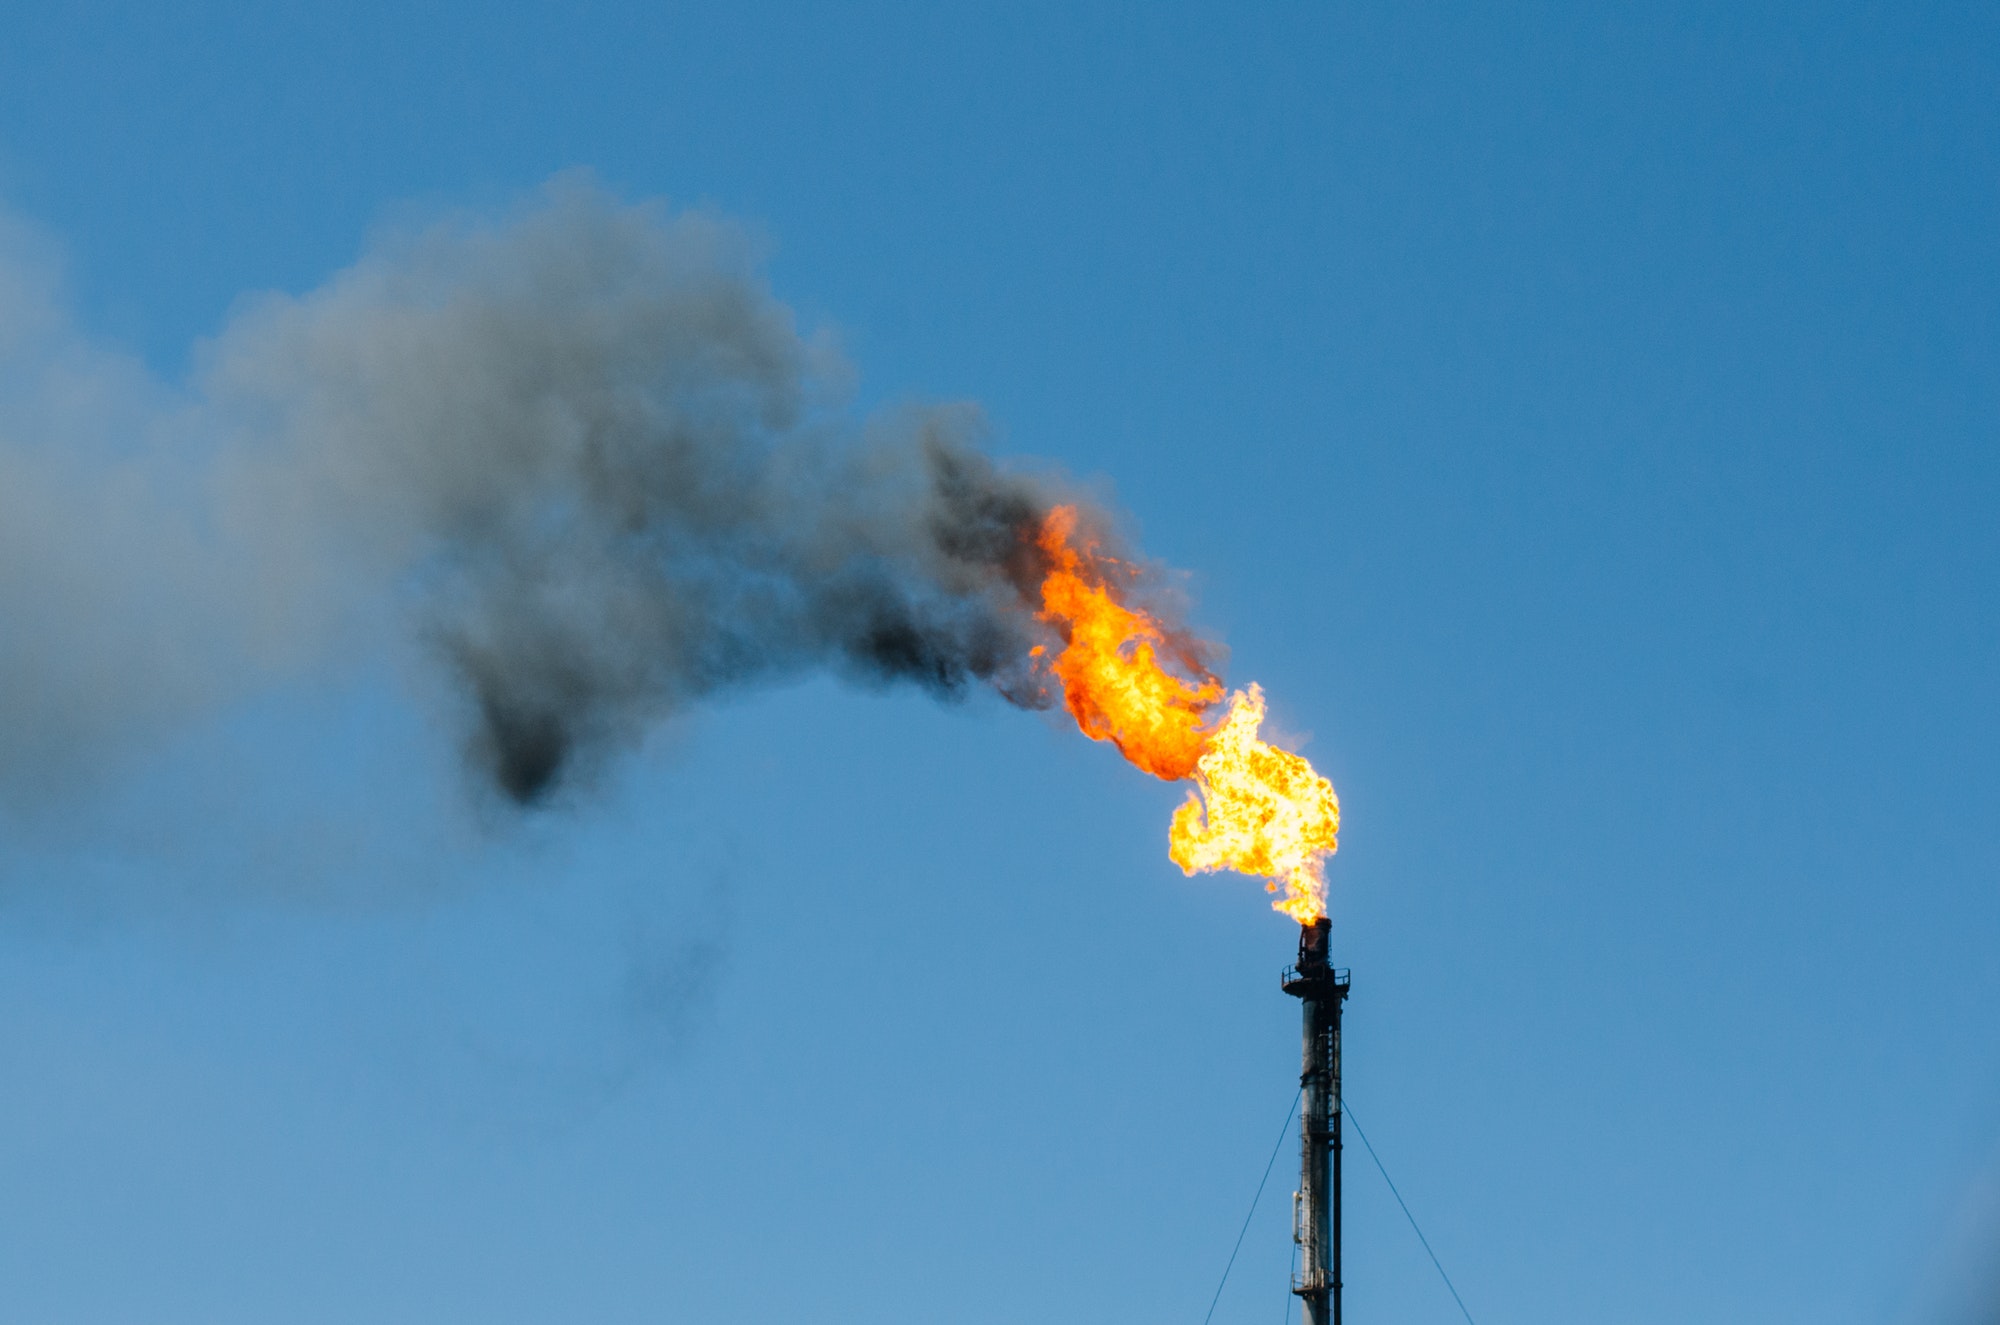 Oil refinery gas flare